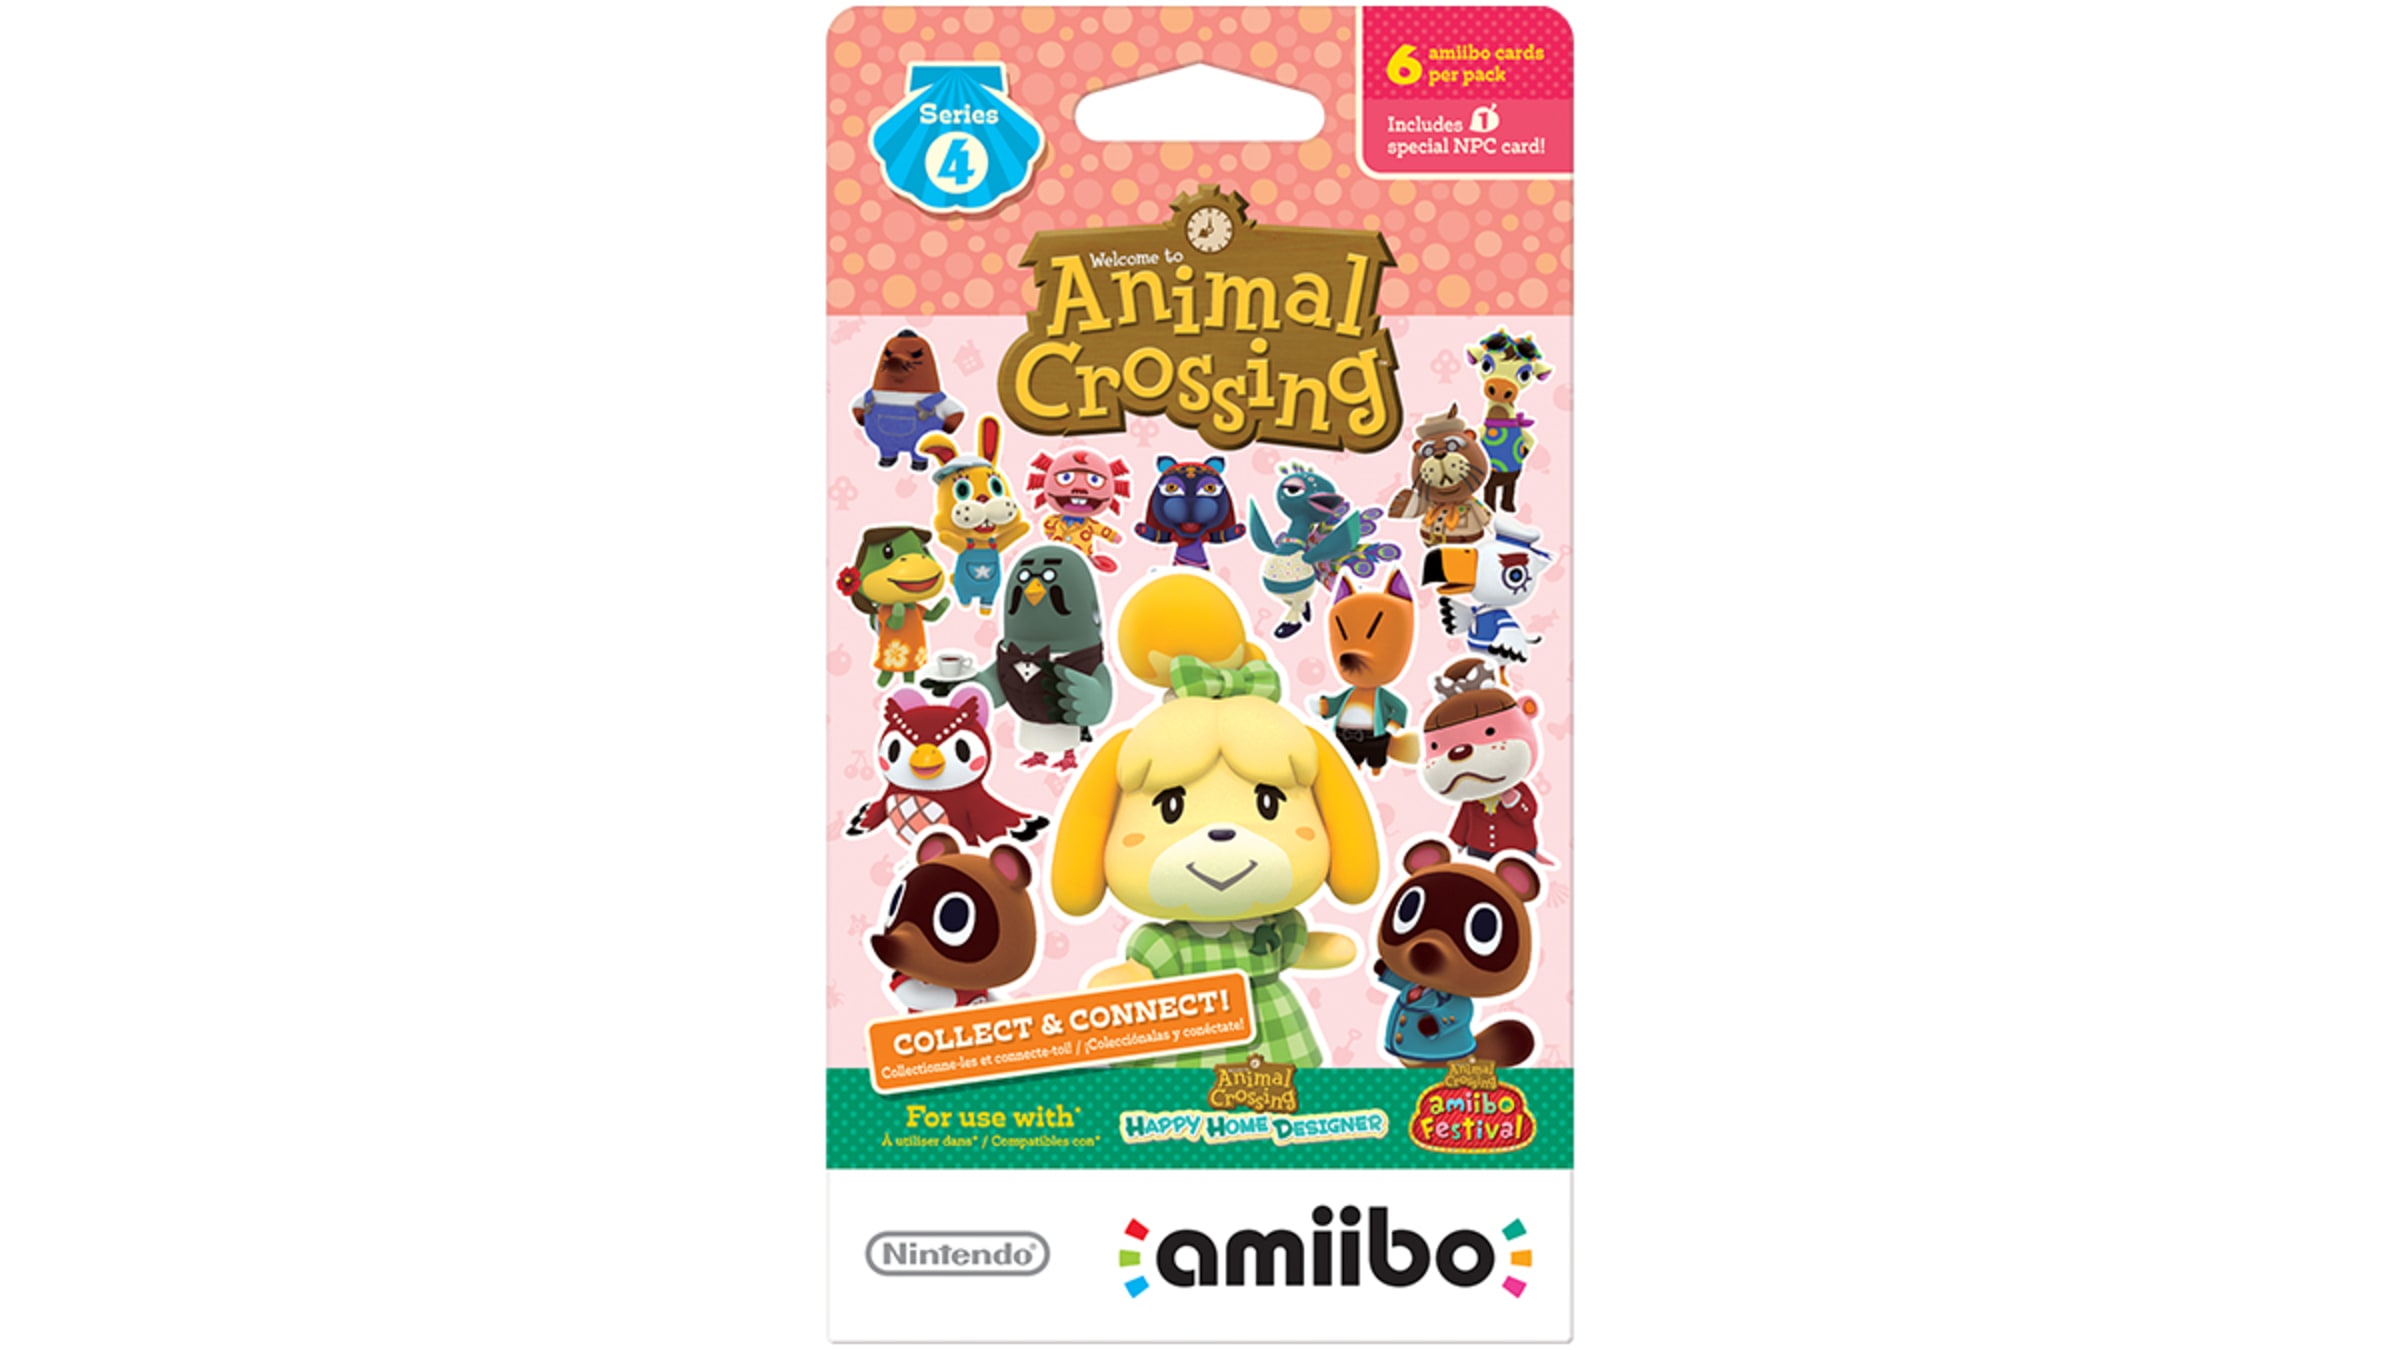 Animal Crossing amiibo Cards - Series 4 - Nintendo Official Site